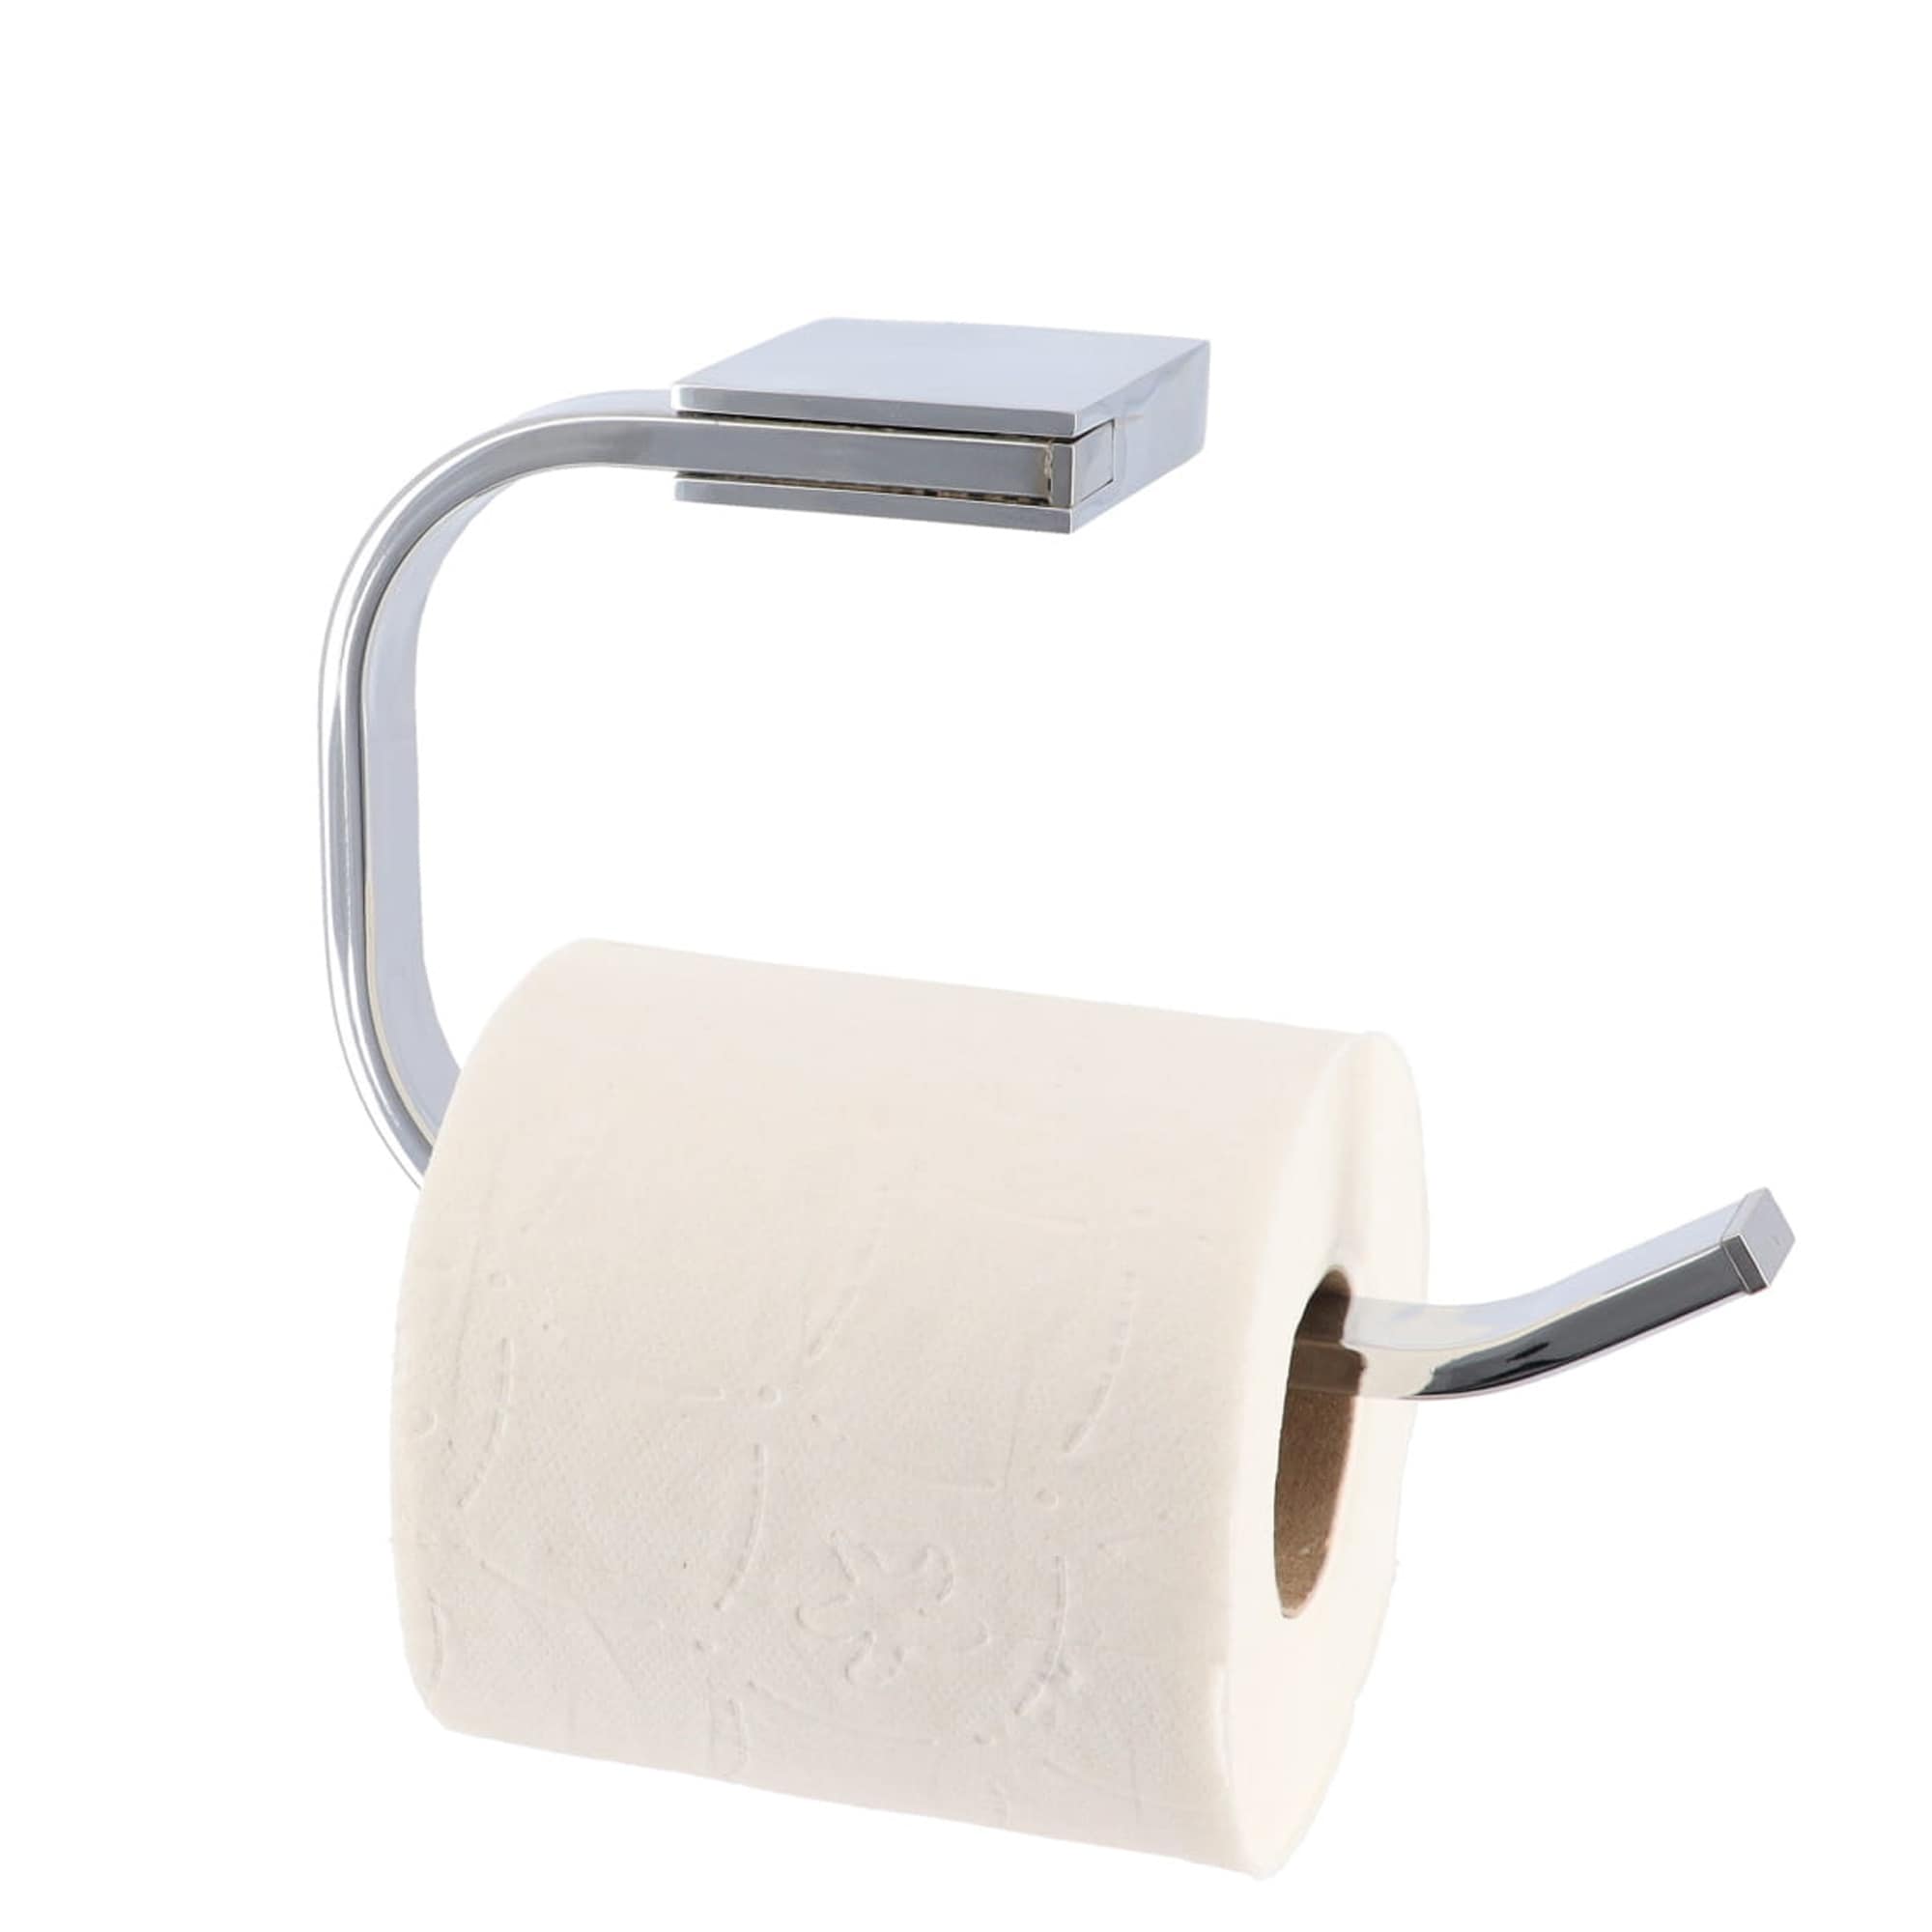 Evideco Metal (Grey) Toilet Paper Holder Reserve 4 Rolls